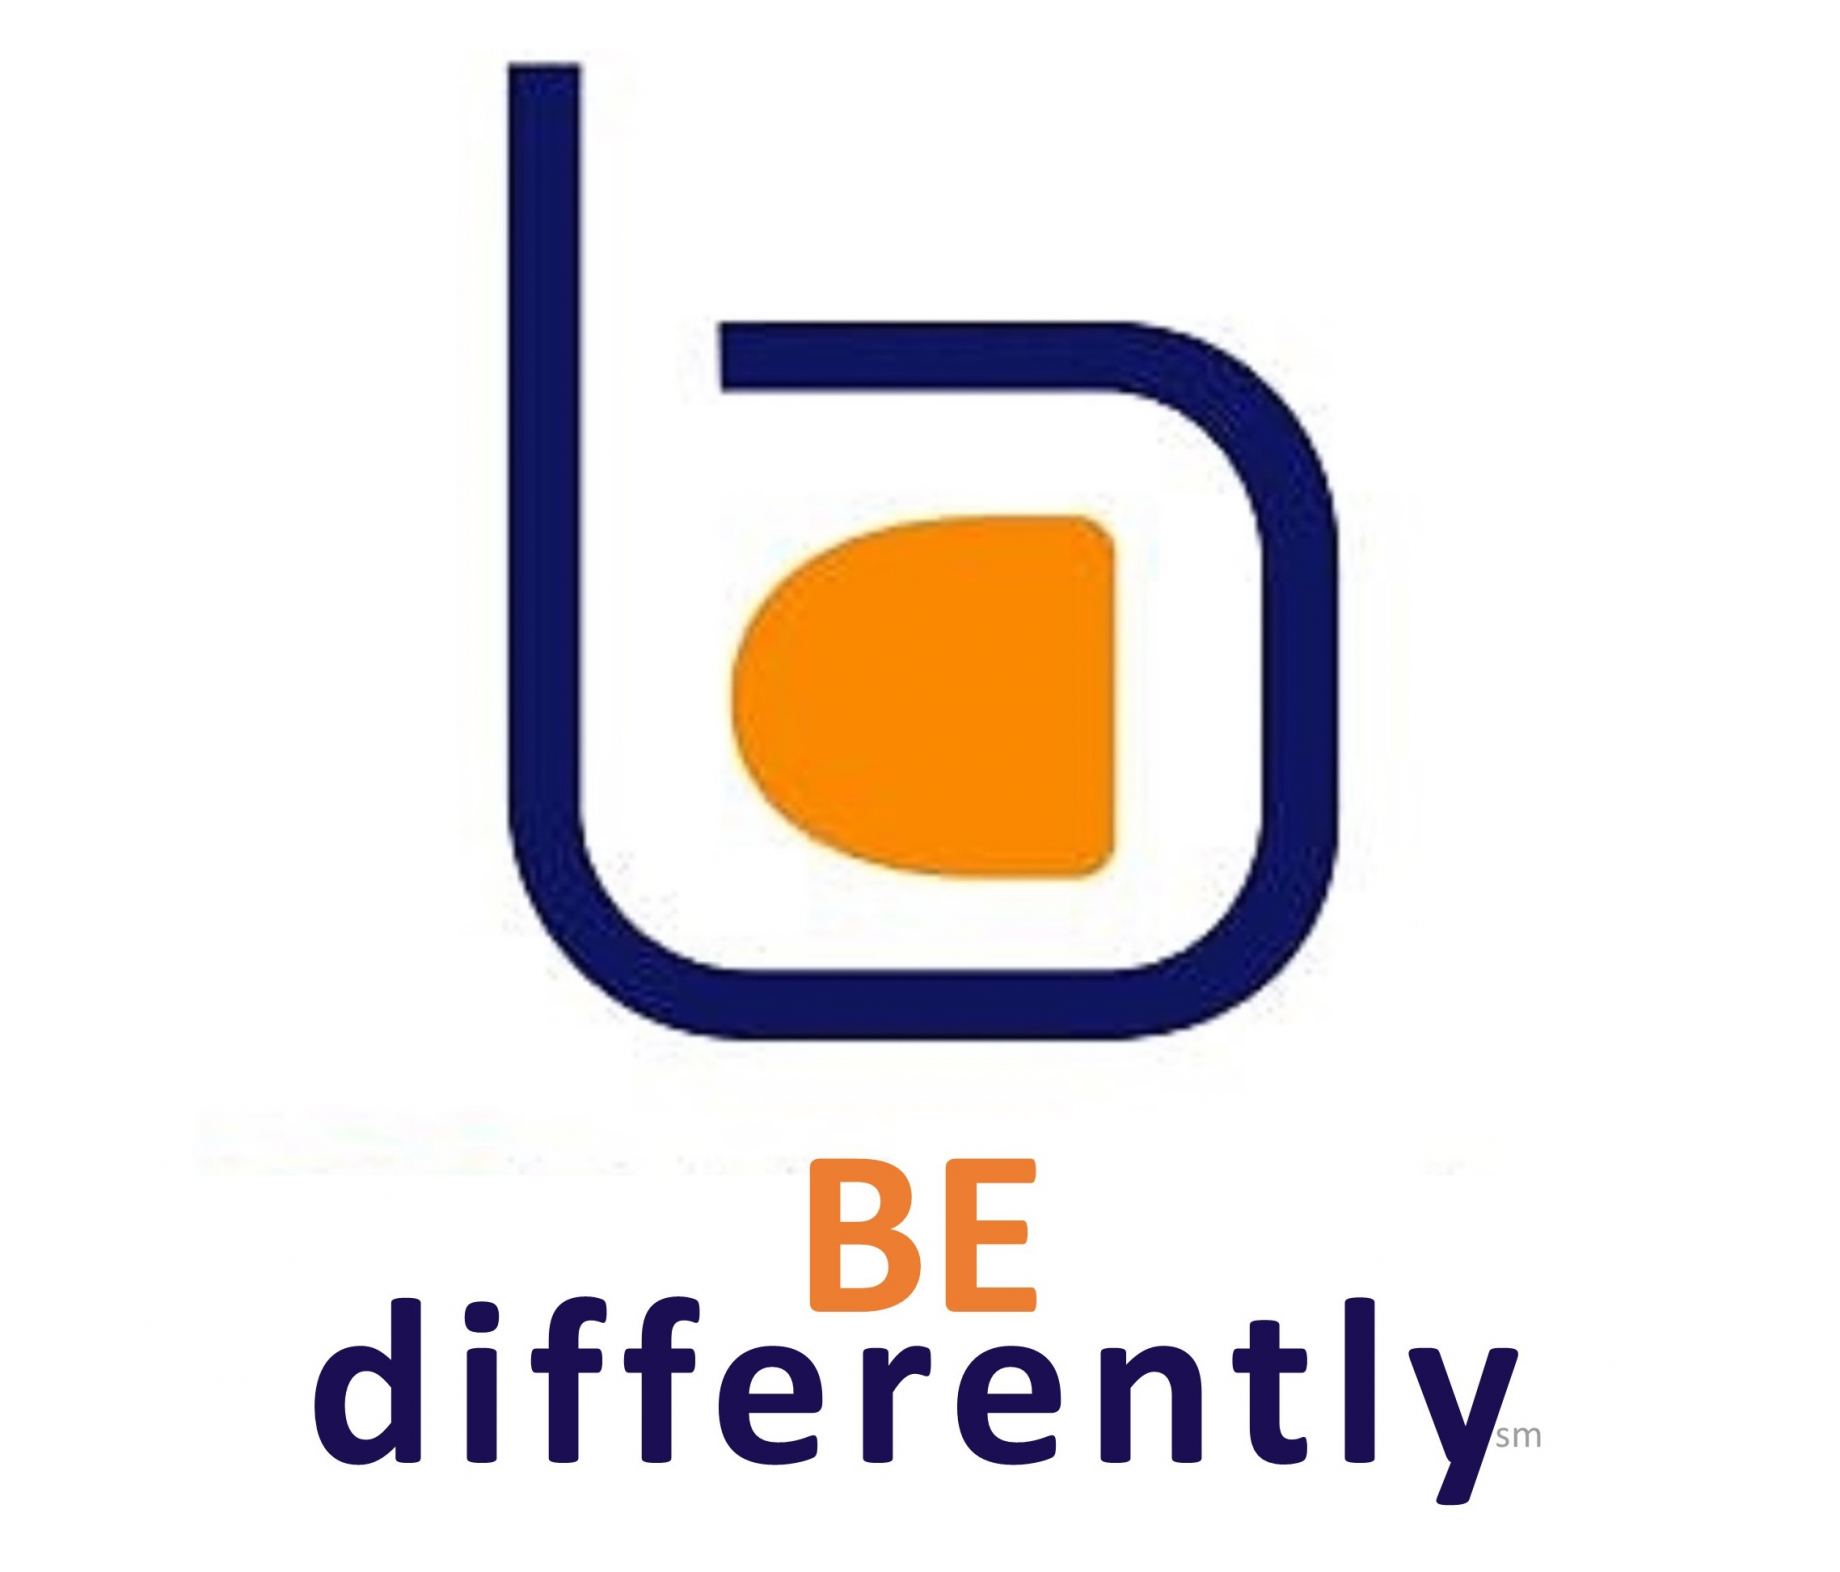 bedifferently Logo